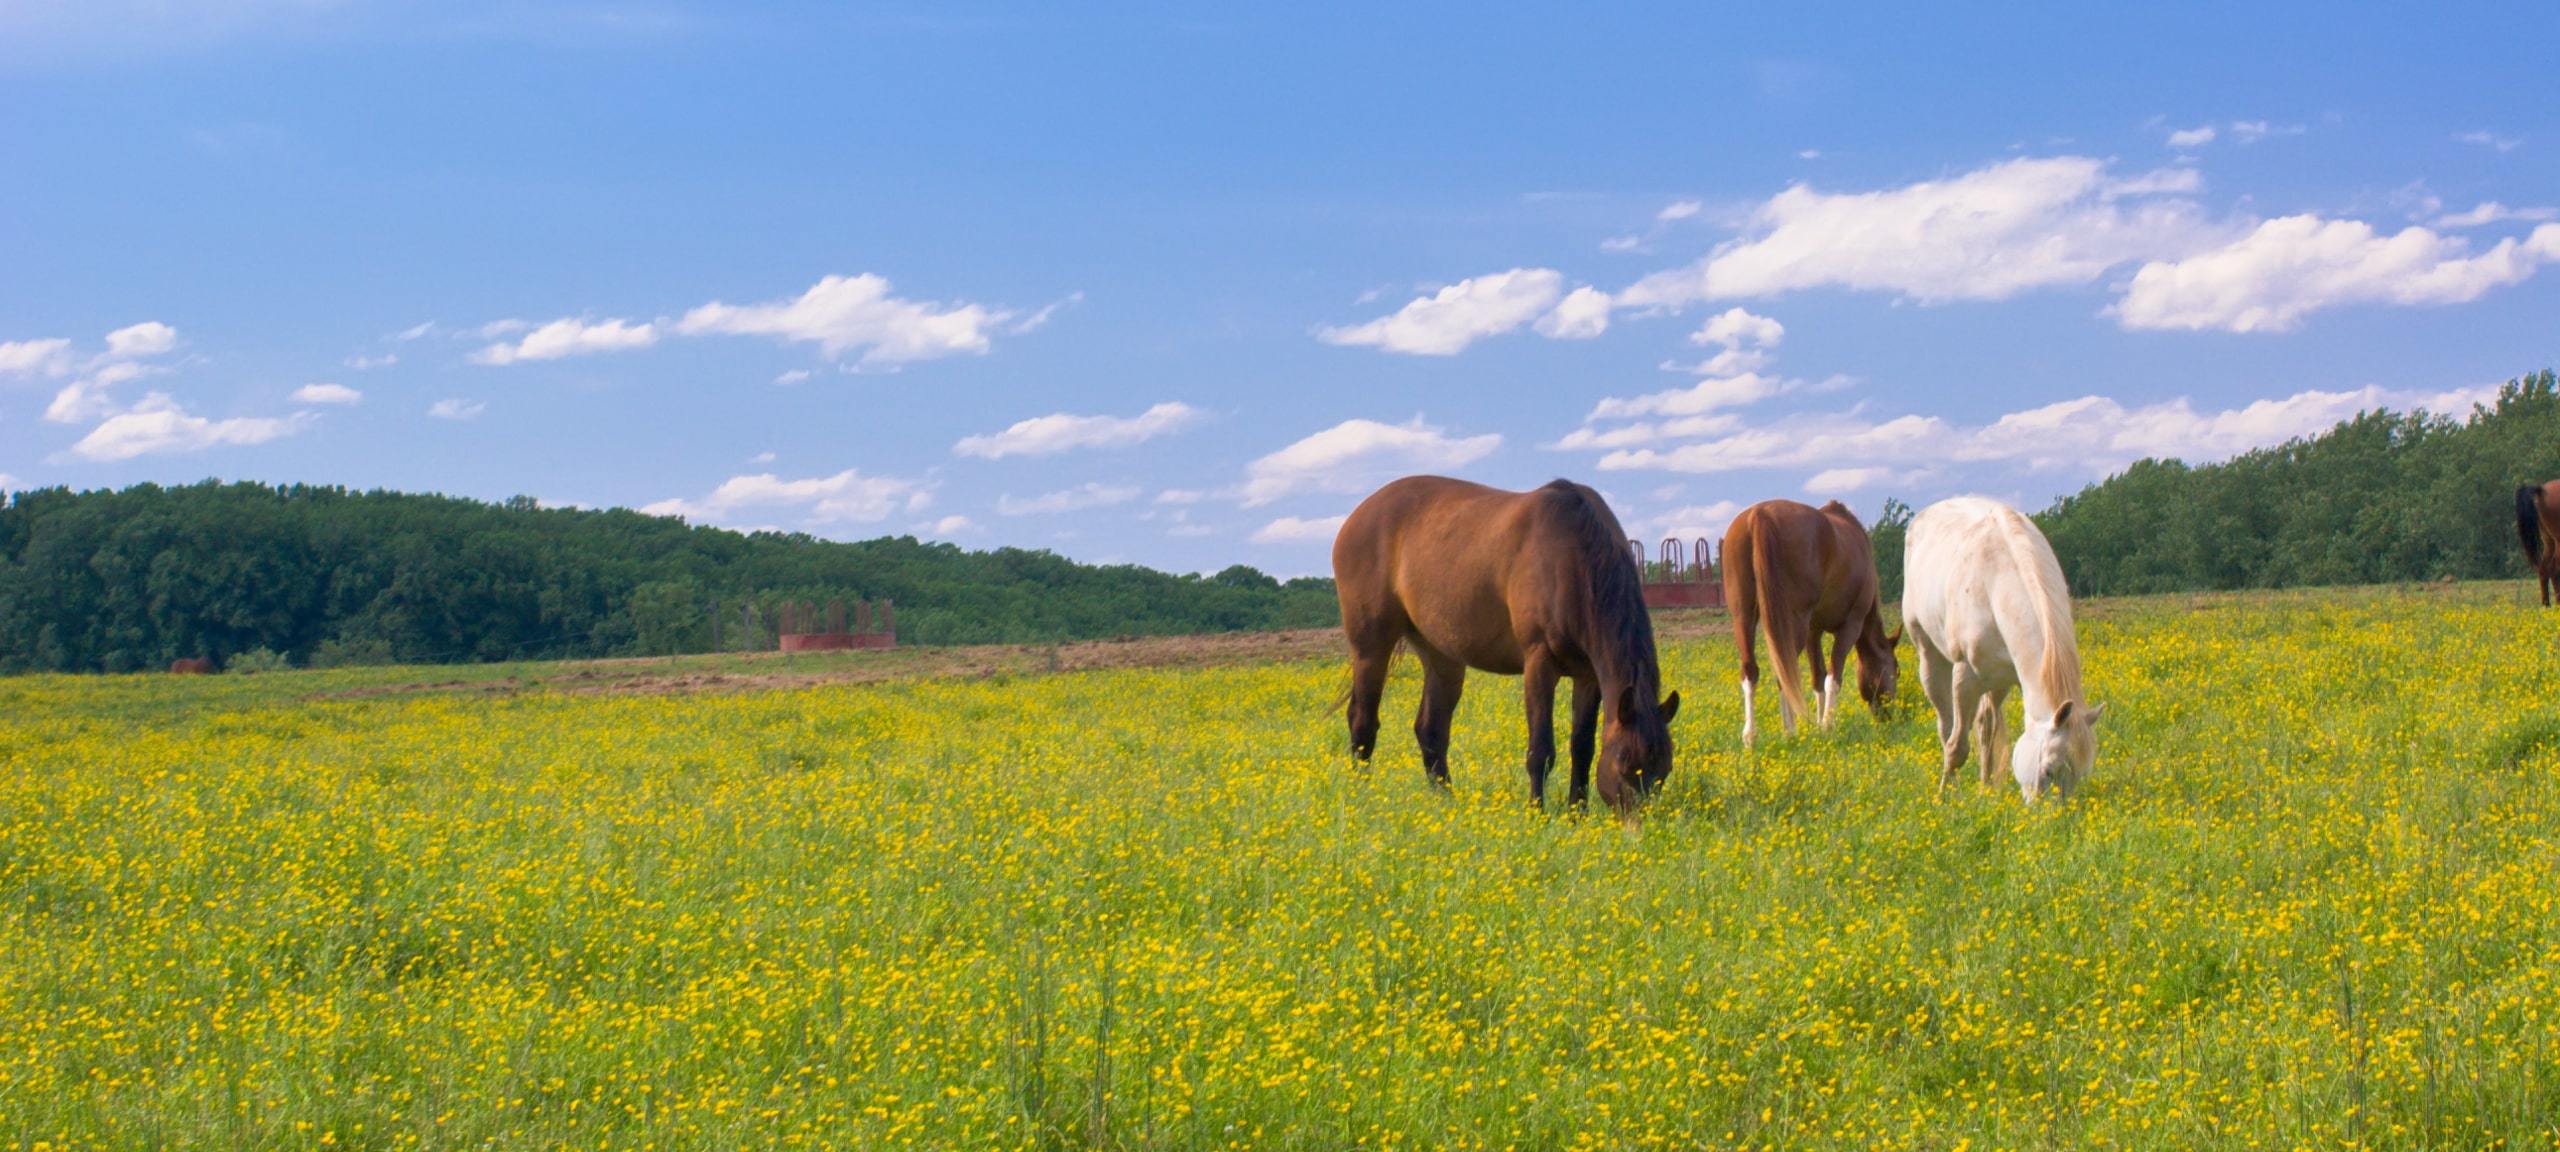 Horses grazing in flower field in rural eastern Maryland